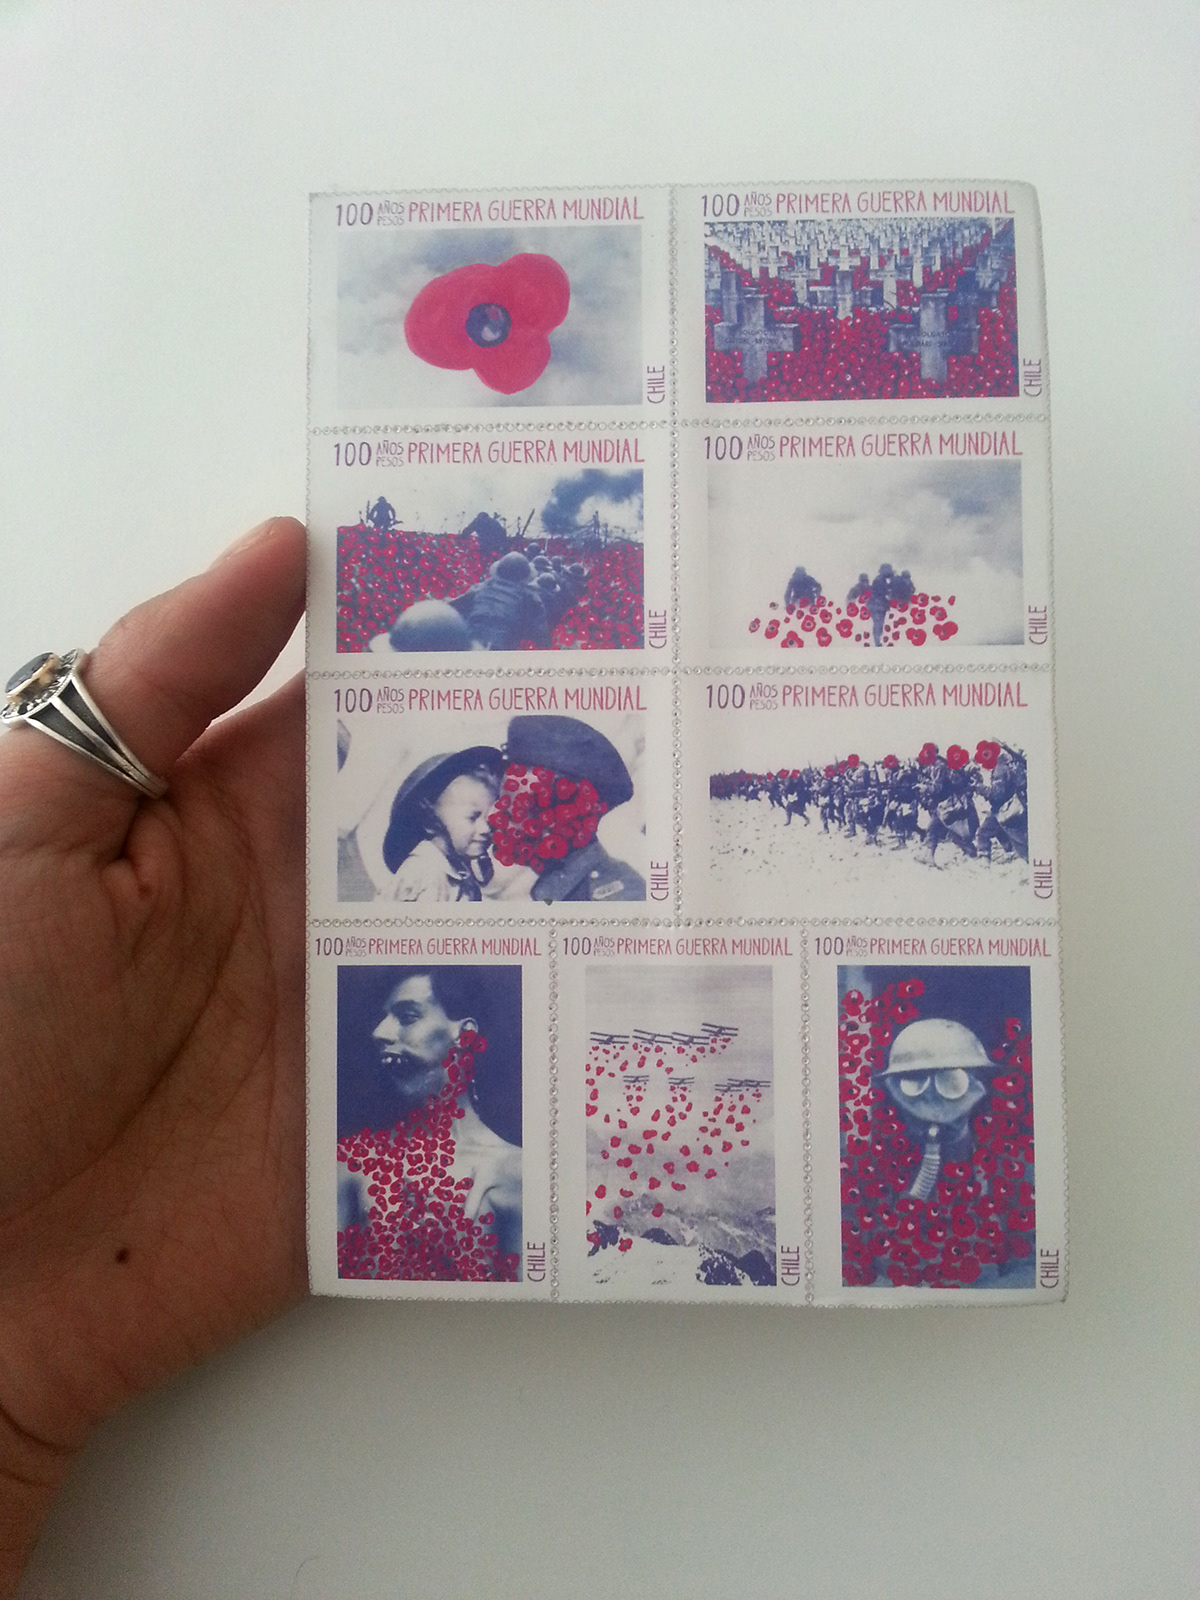 stamps estampilla estampillas primera guerra mundial world war 1 great war poppy AMAPOLA